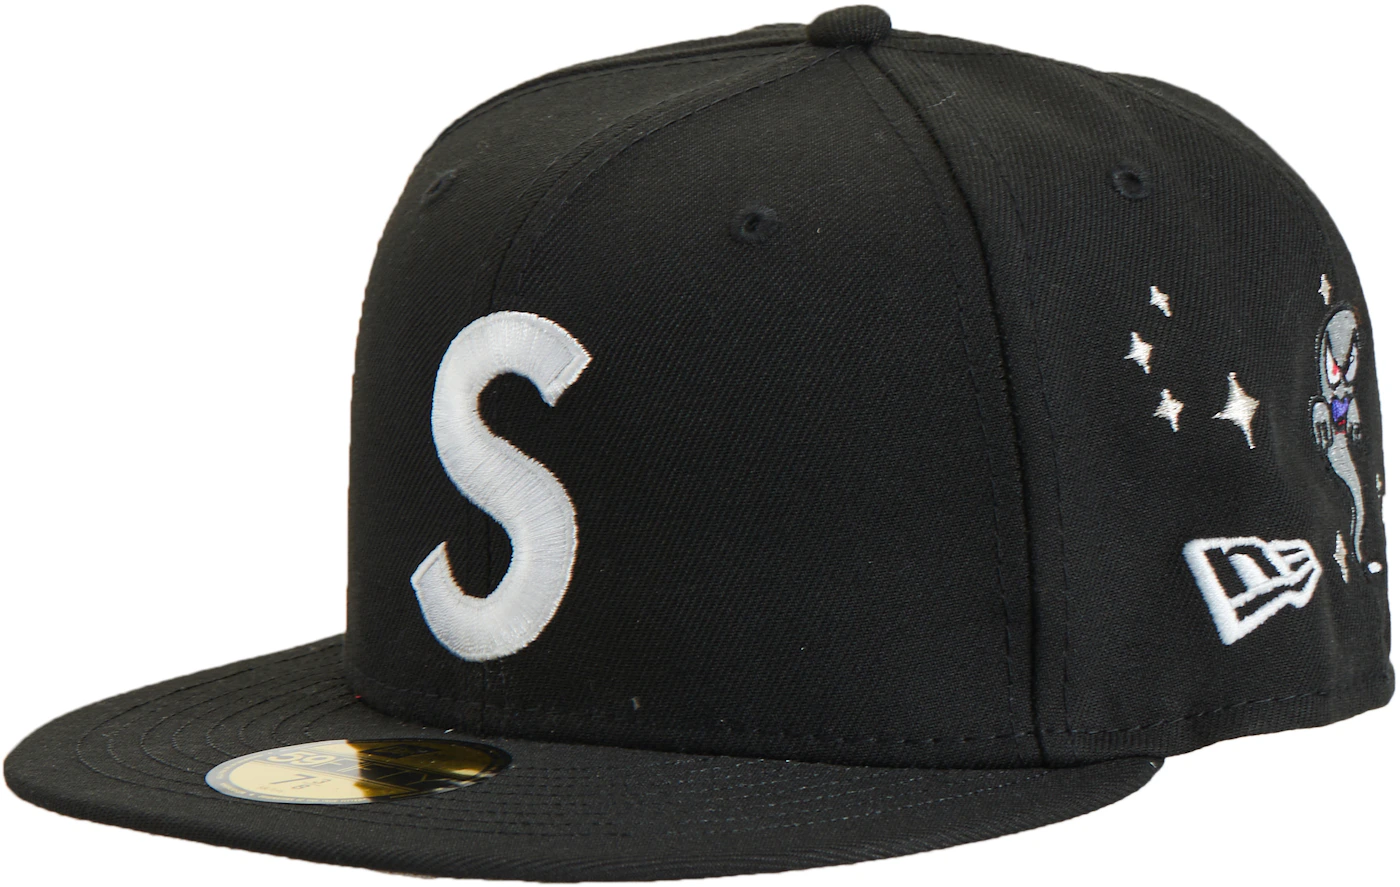 Stylish Combo Of Black Supreme Cap And Black Smile Cap